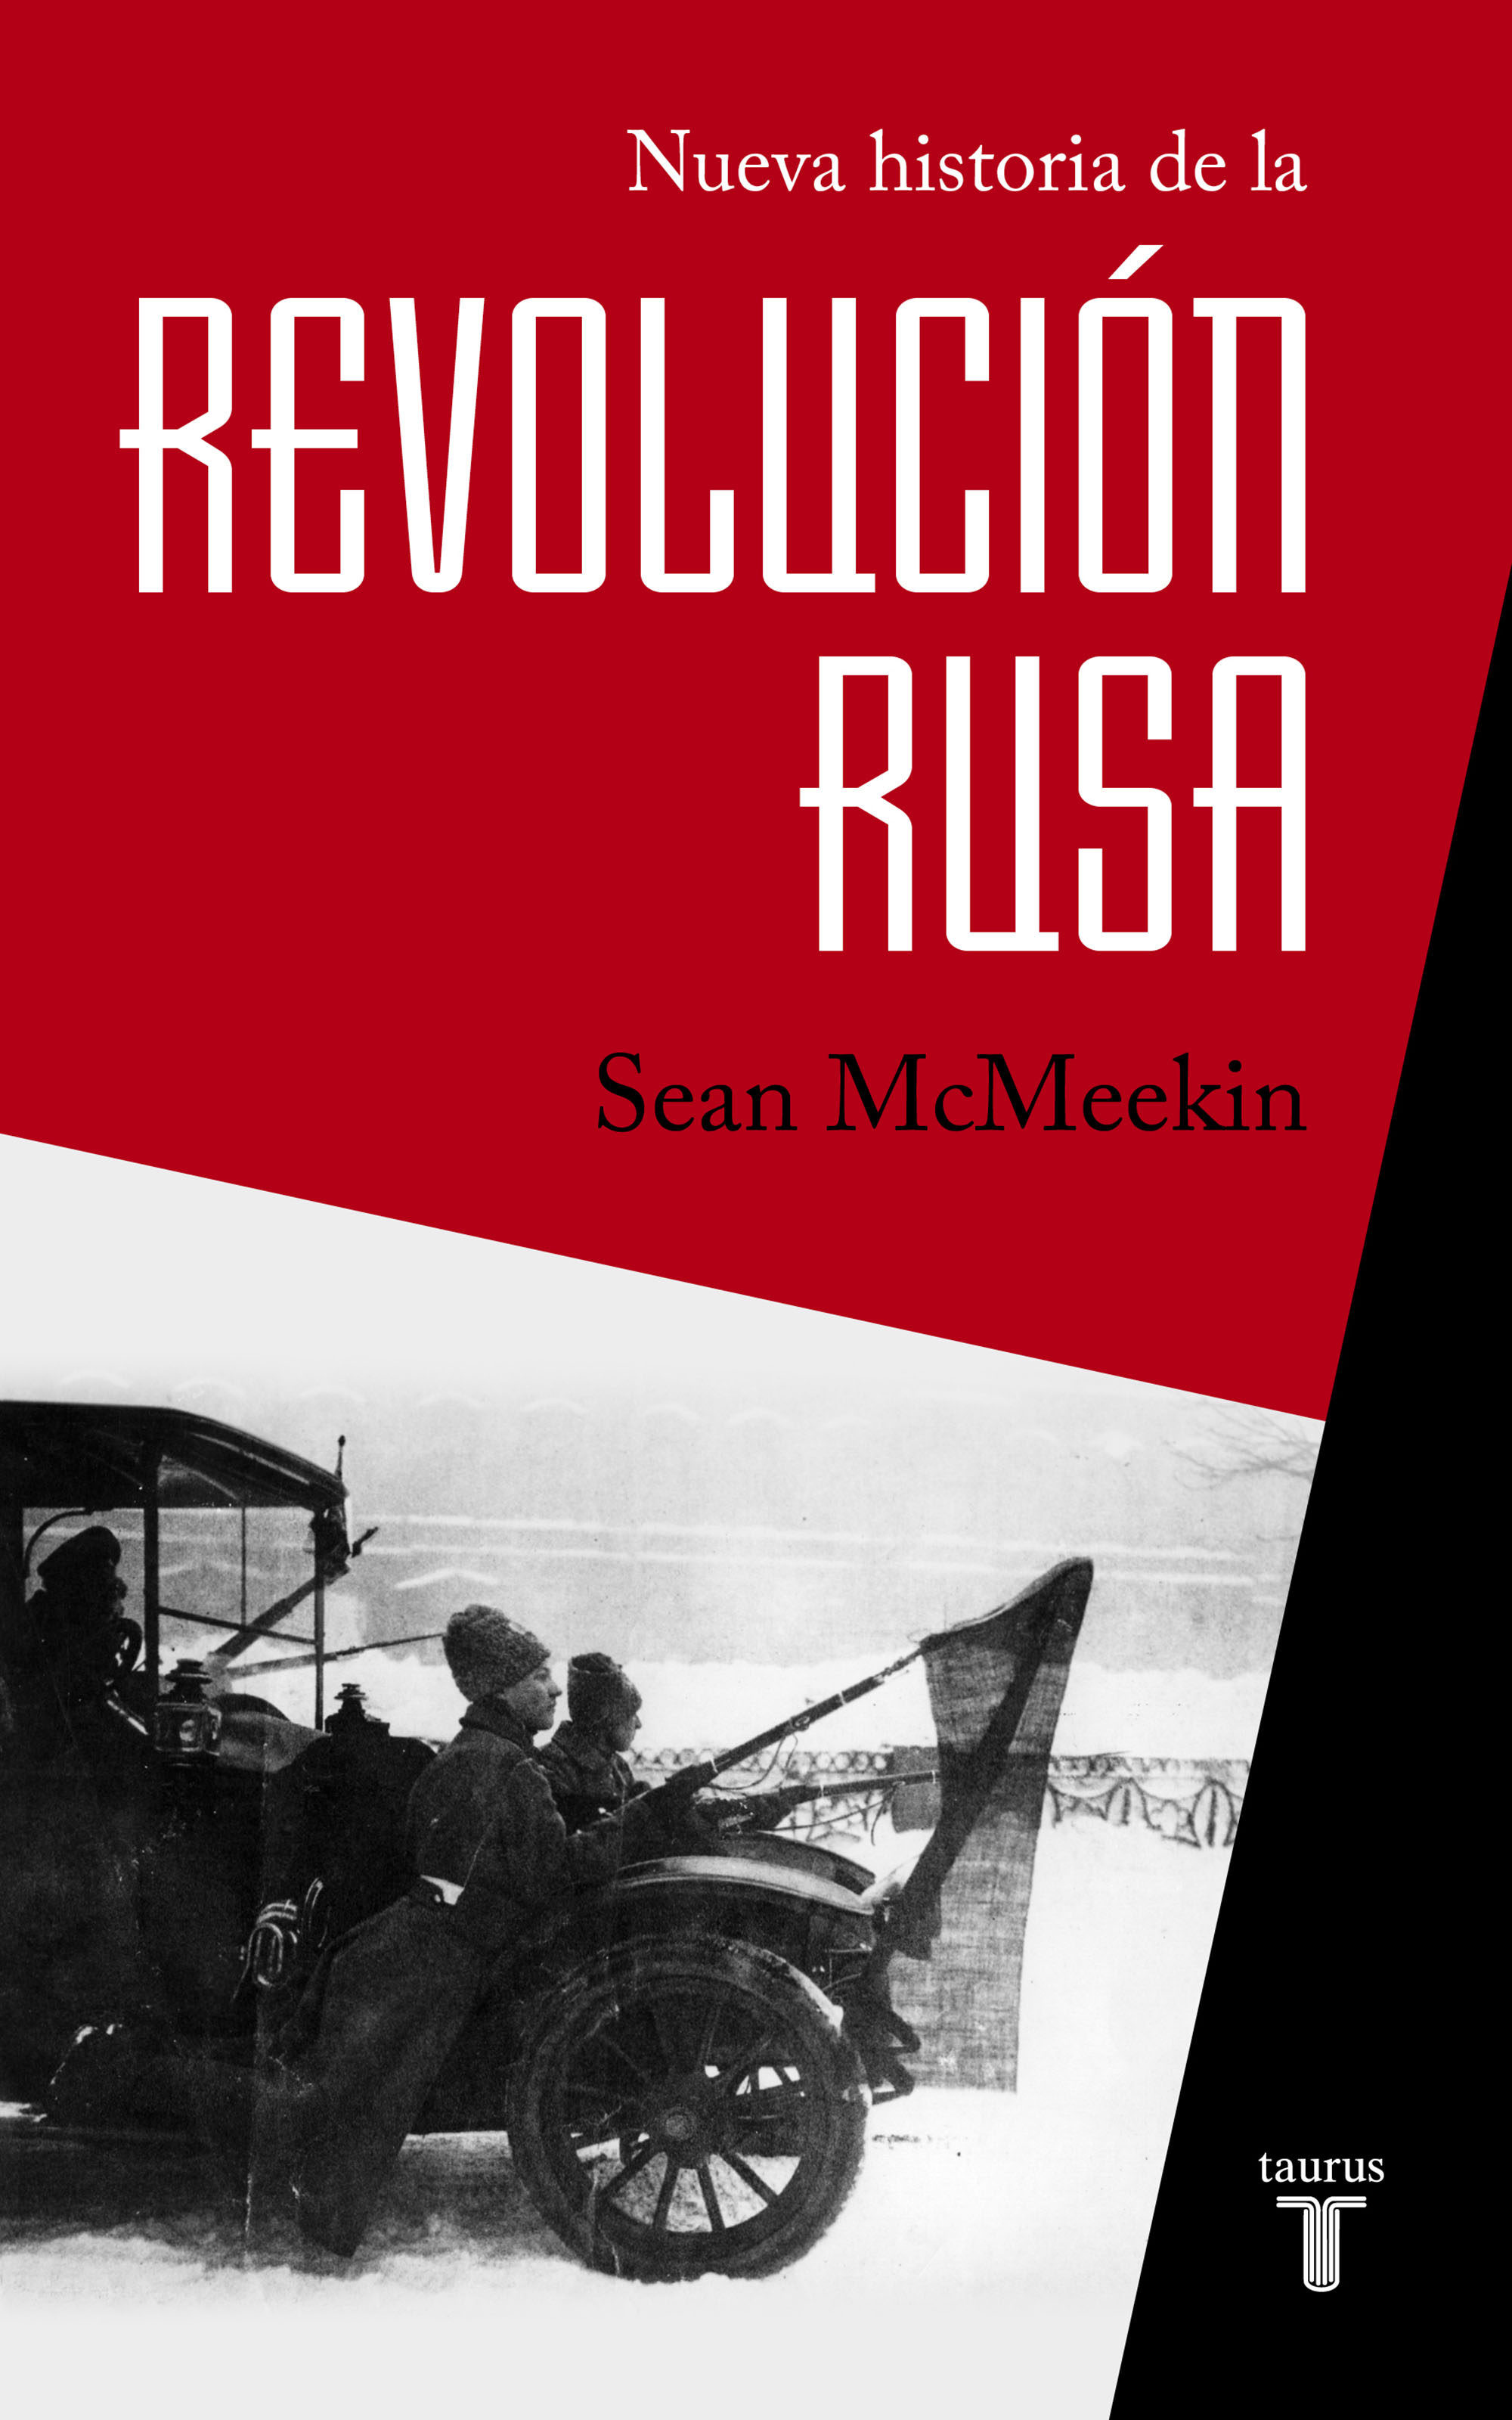 Imagen Revolución Rusa/ Sean McMeekin 1